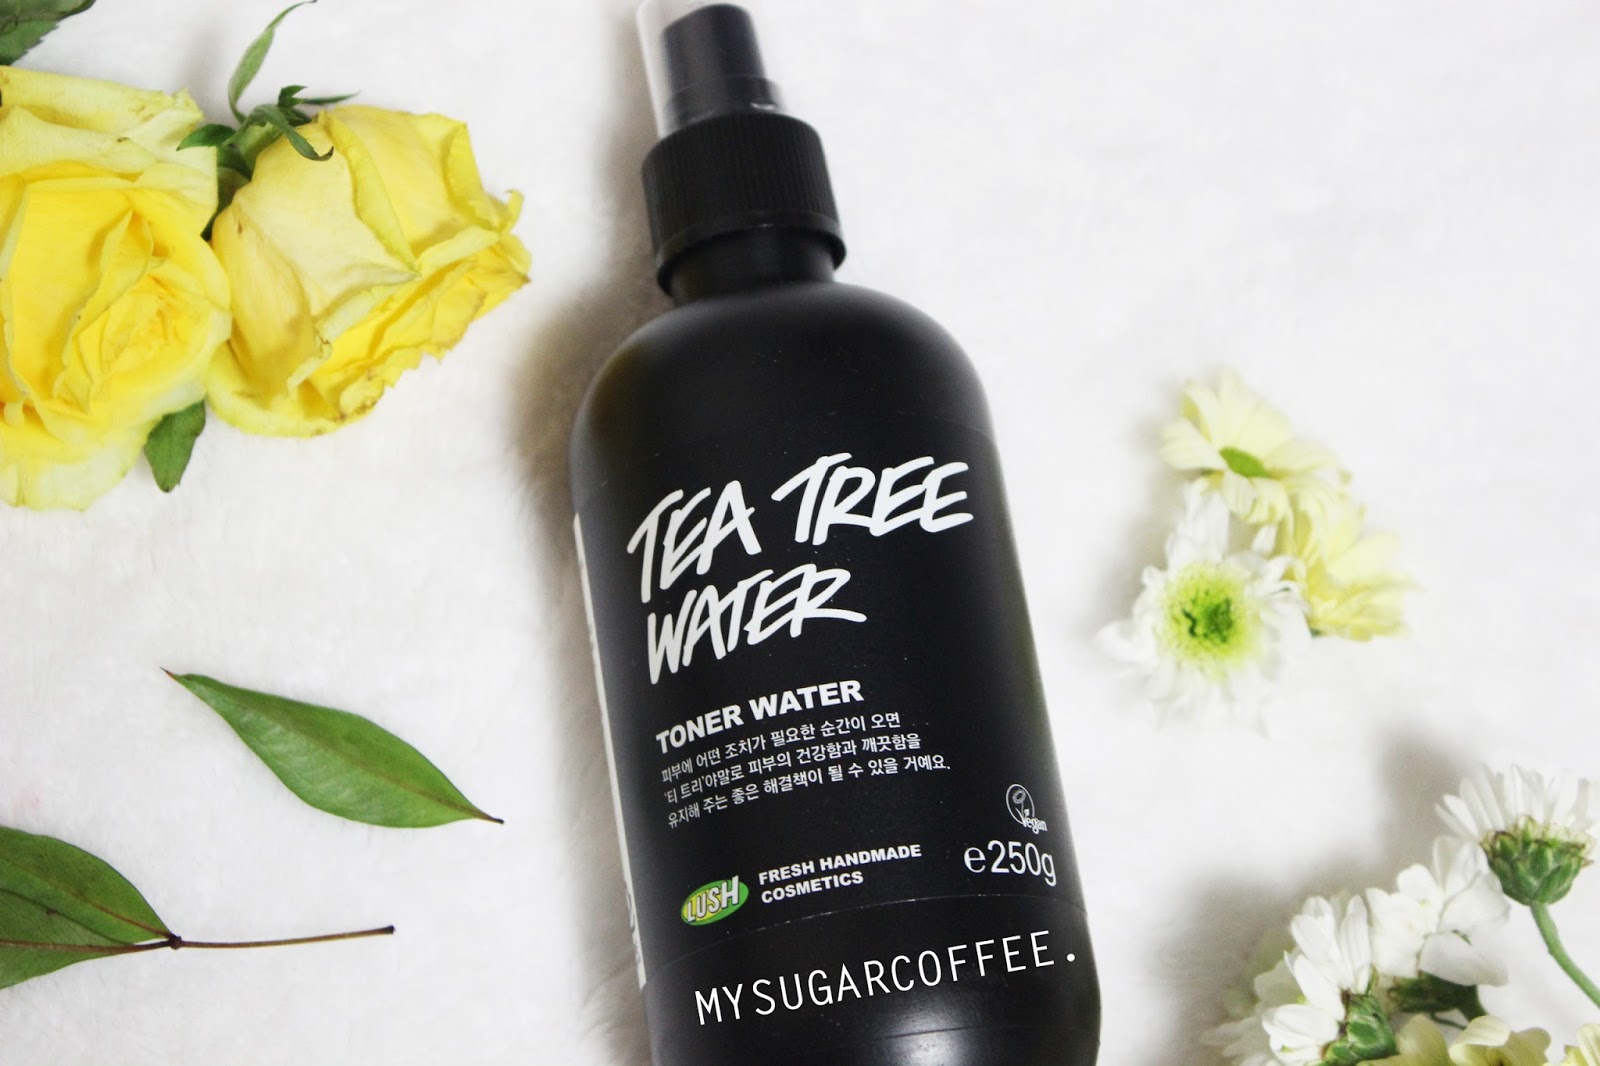 MY SUGARCOFFEE: REVIEW : Lush "Tea Tree Water" Toner